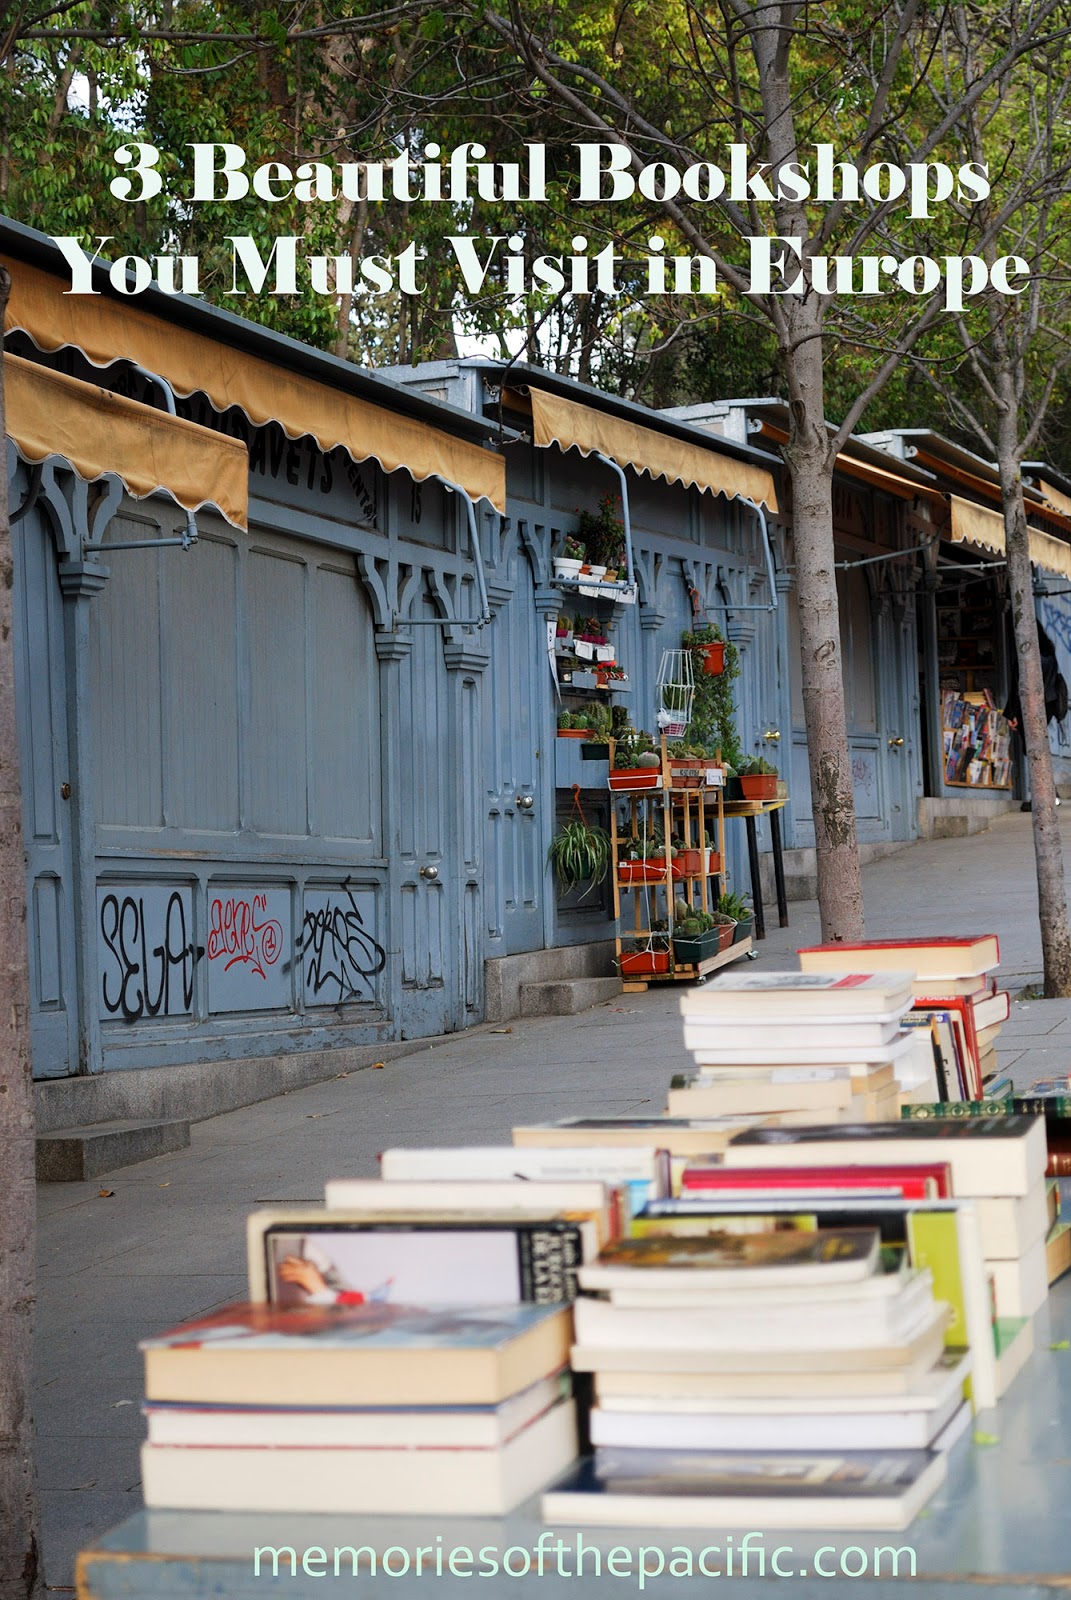 book market fair shop store europe beautiful cute cool instagrammable instagram worthy